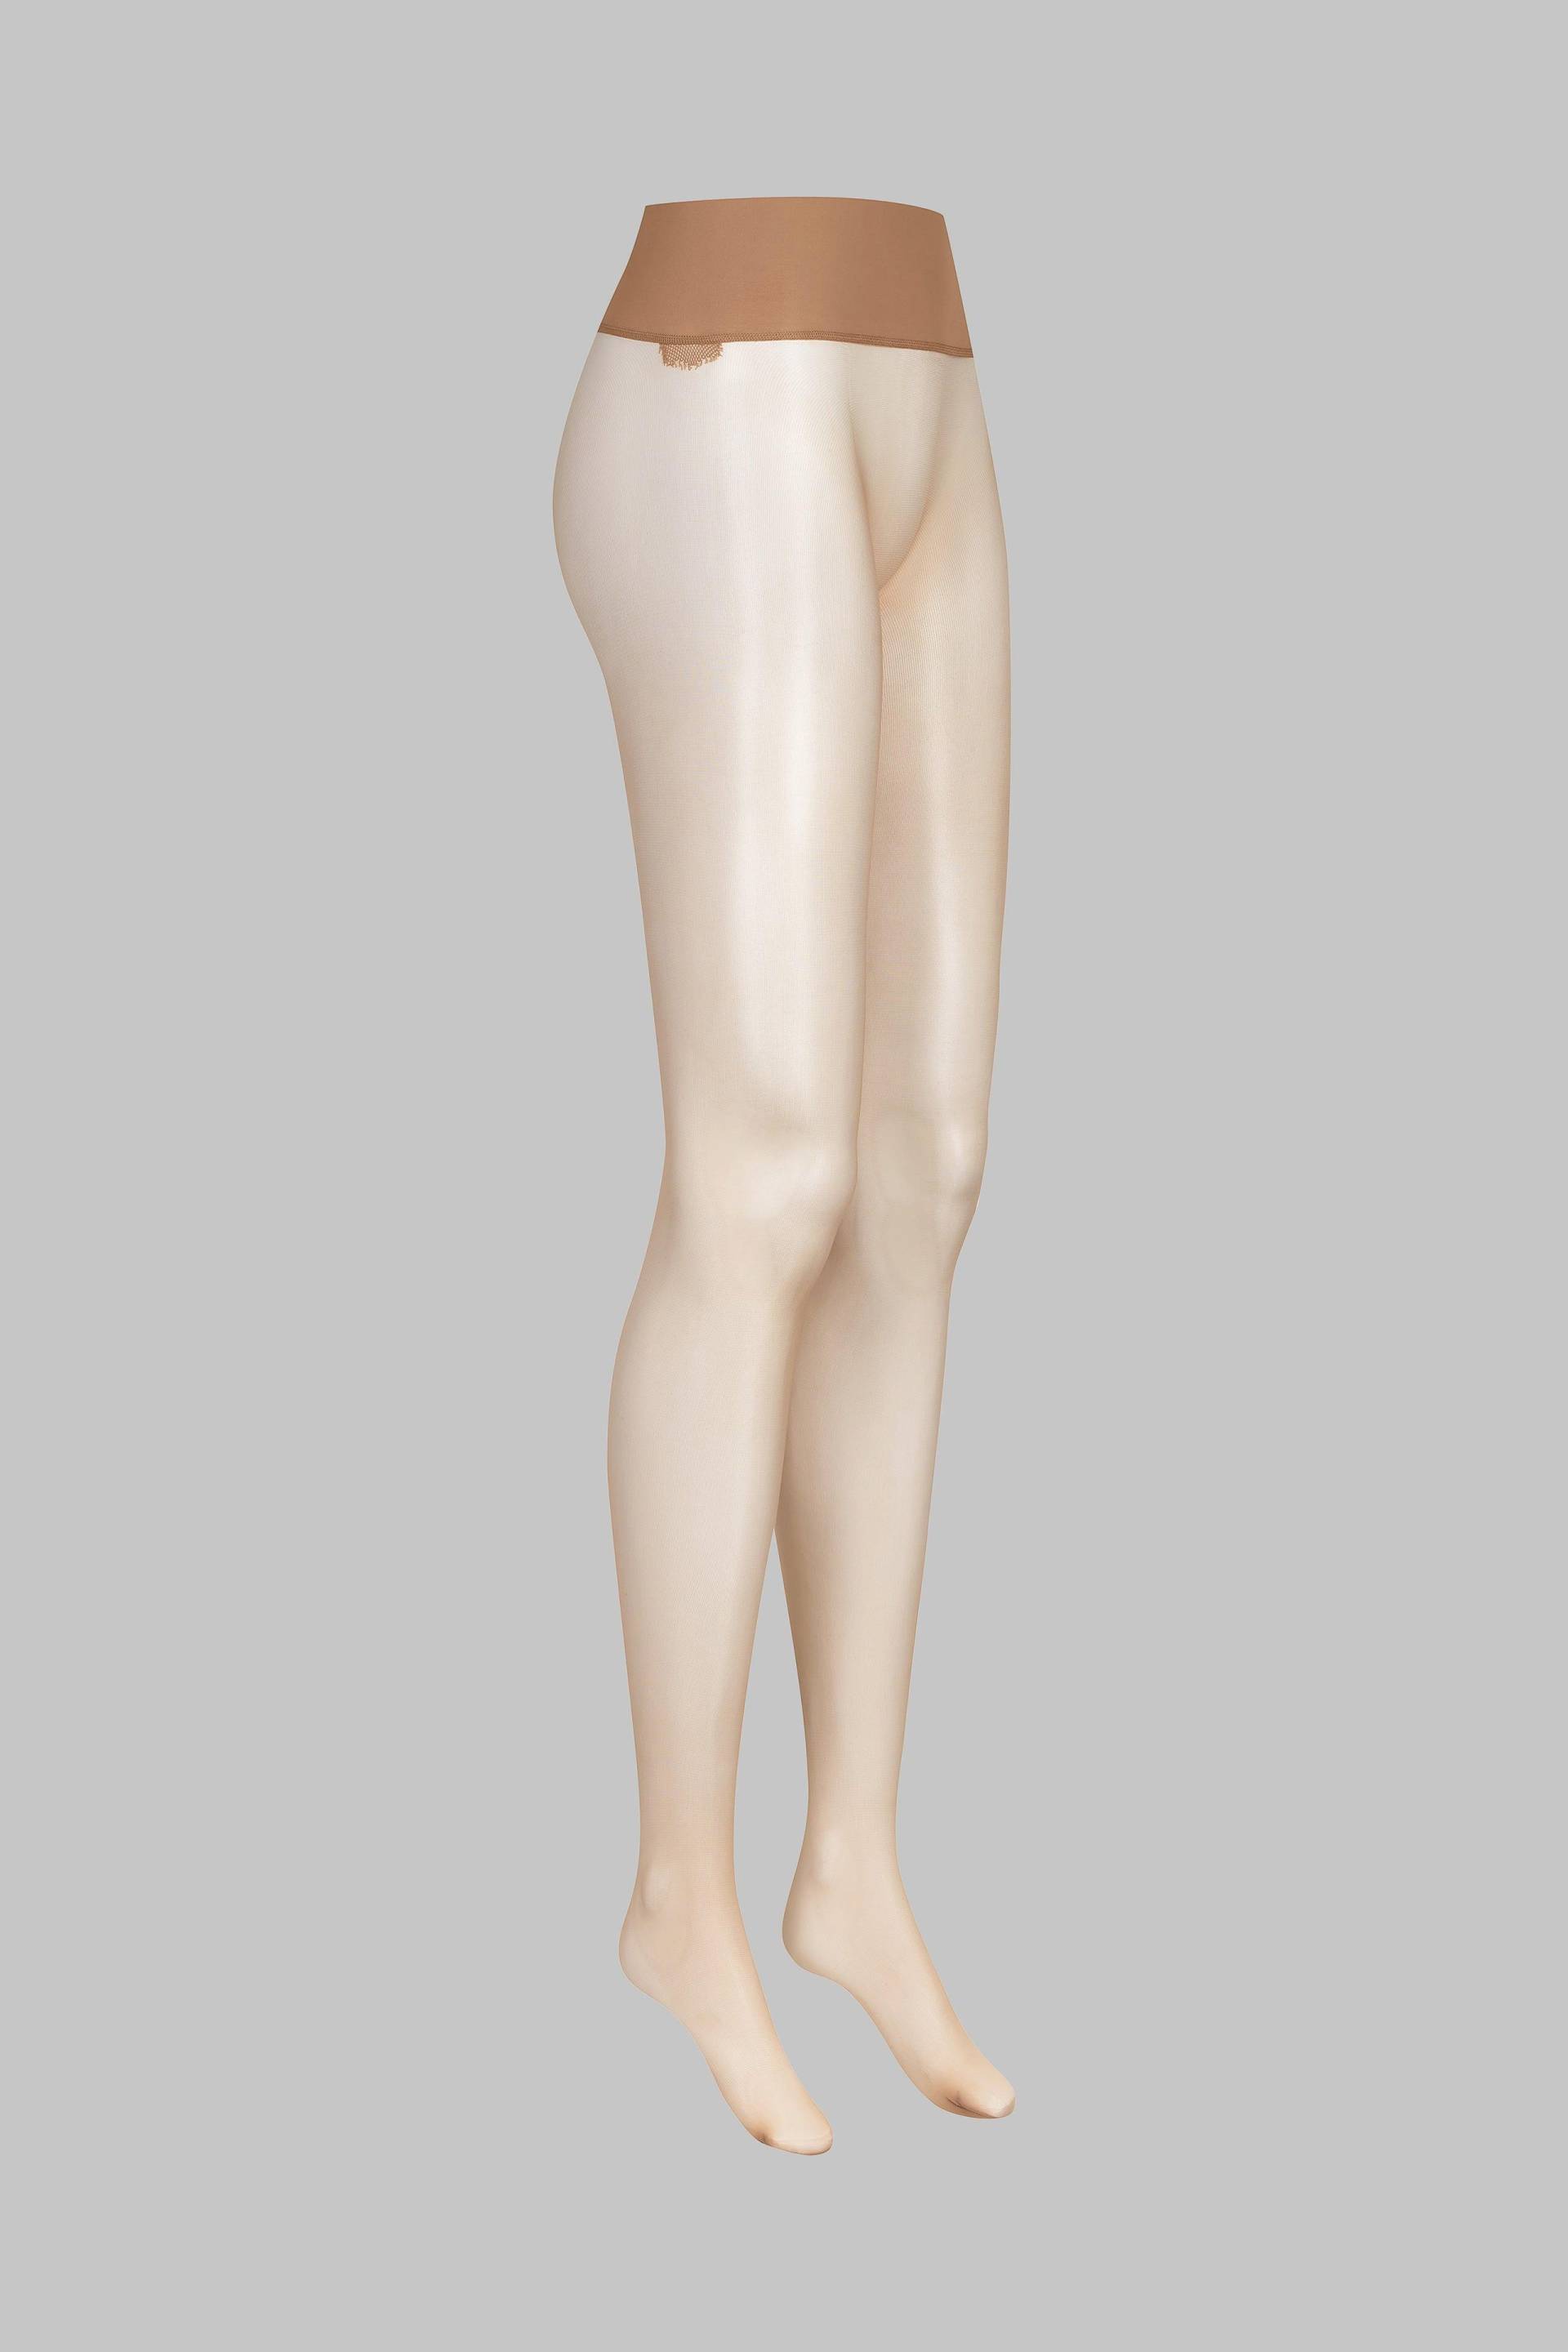 Strumpfhose Seamless Signature - 20d - Medium Nude Damen Beige Medium 2 von MAISON CLOSE